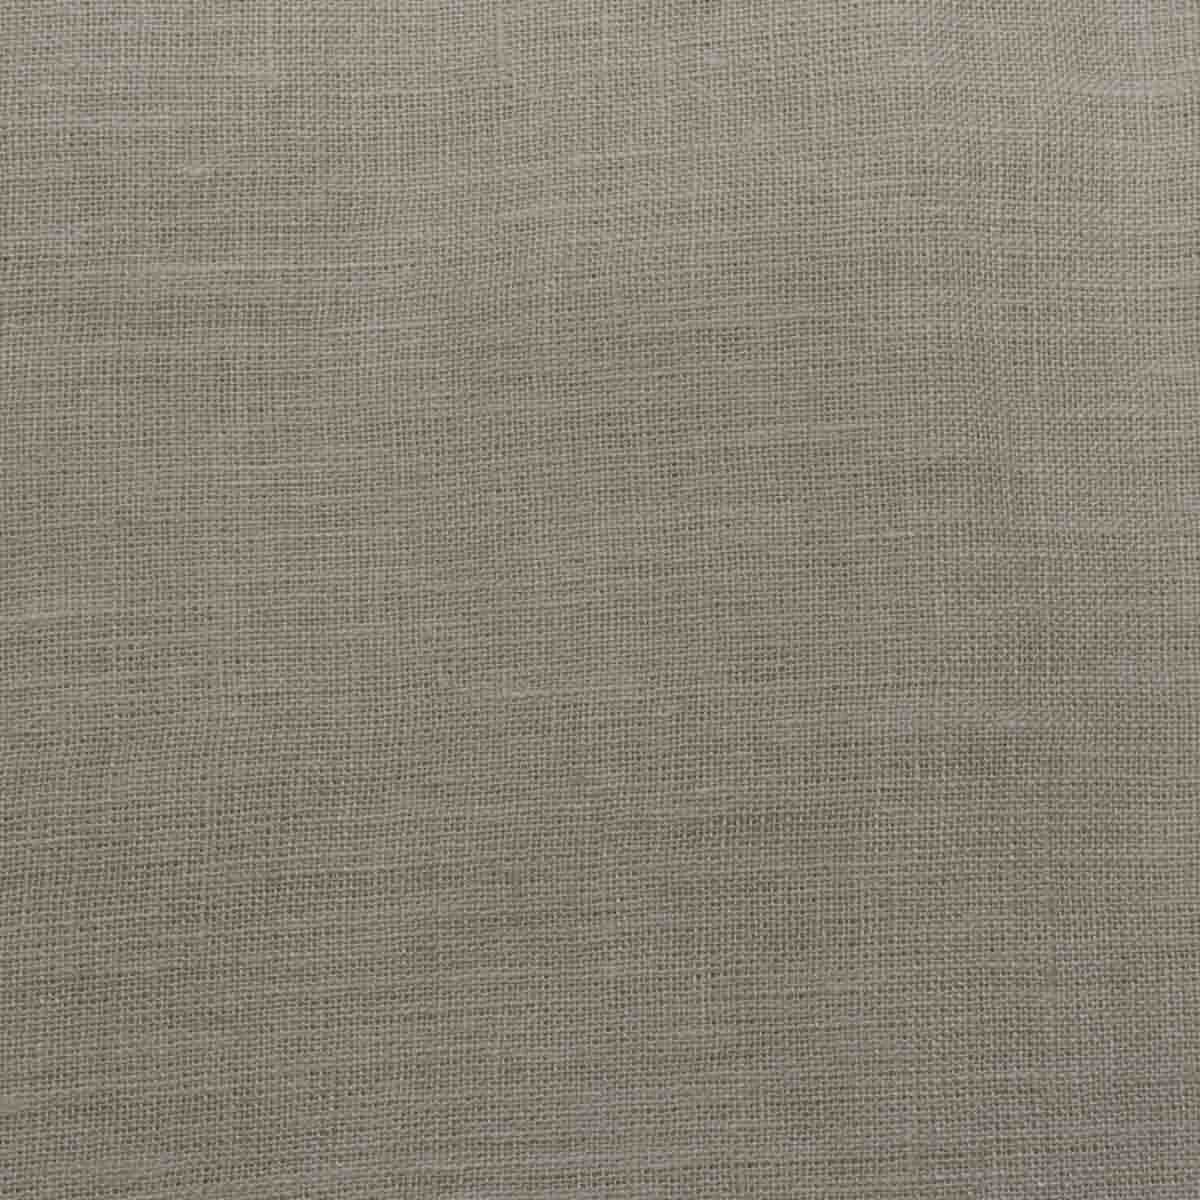 Pure Linen Cotton Gray (2)